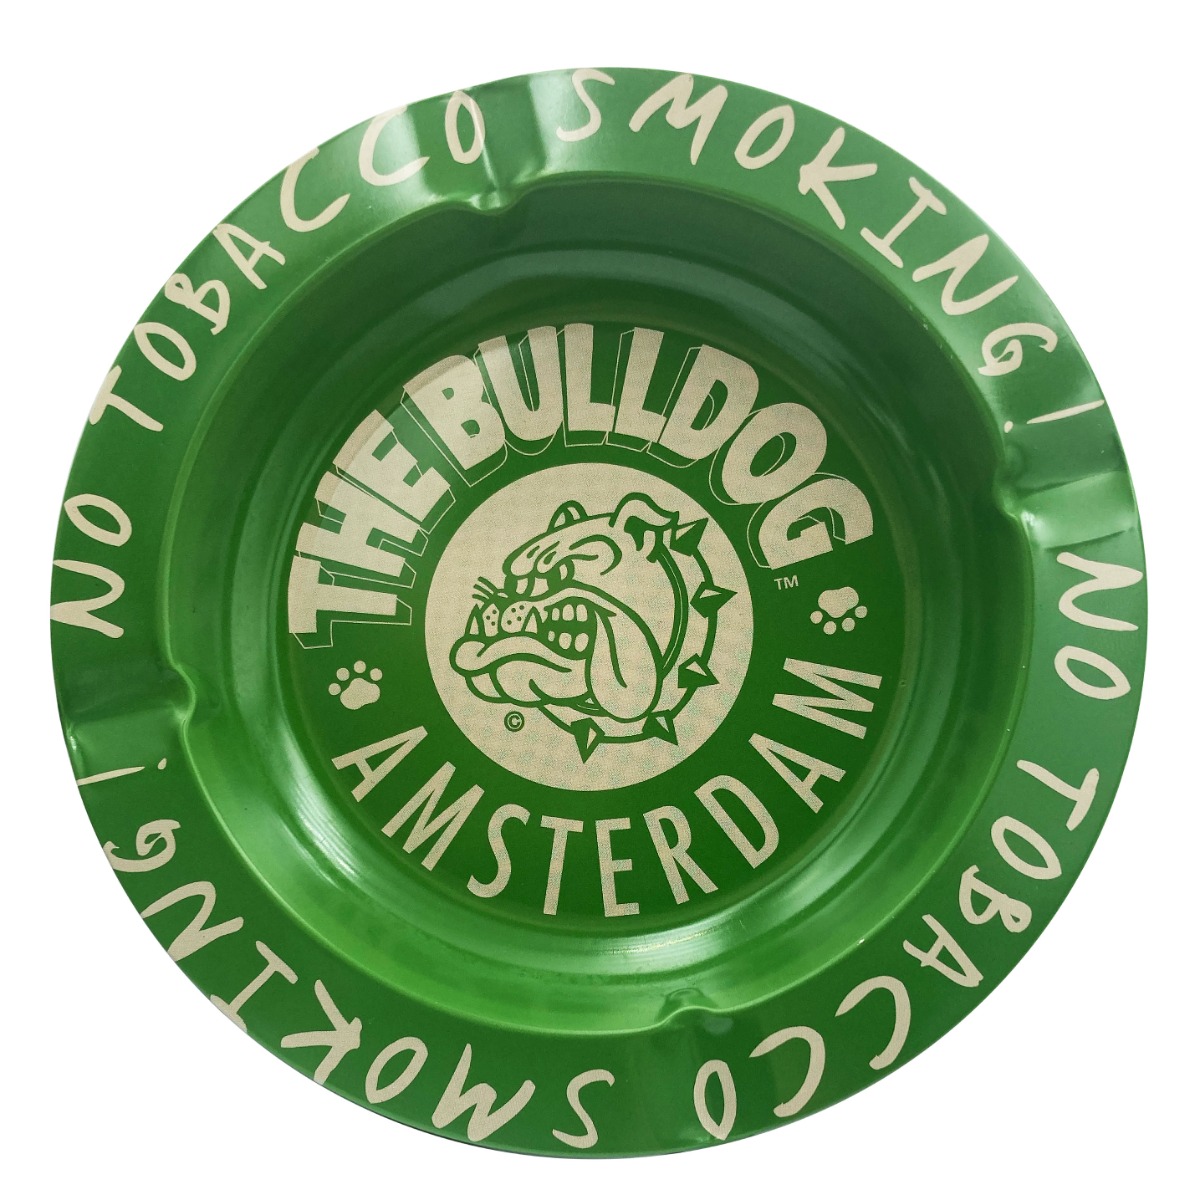 The Bulldog Ashtray Green